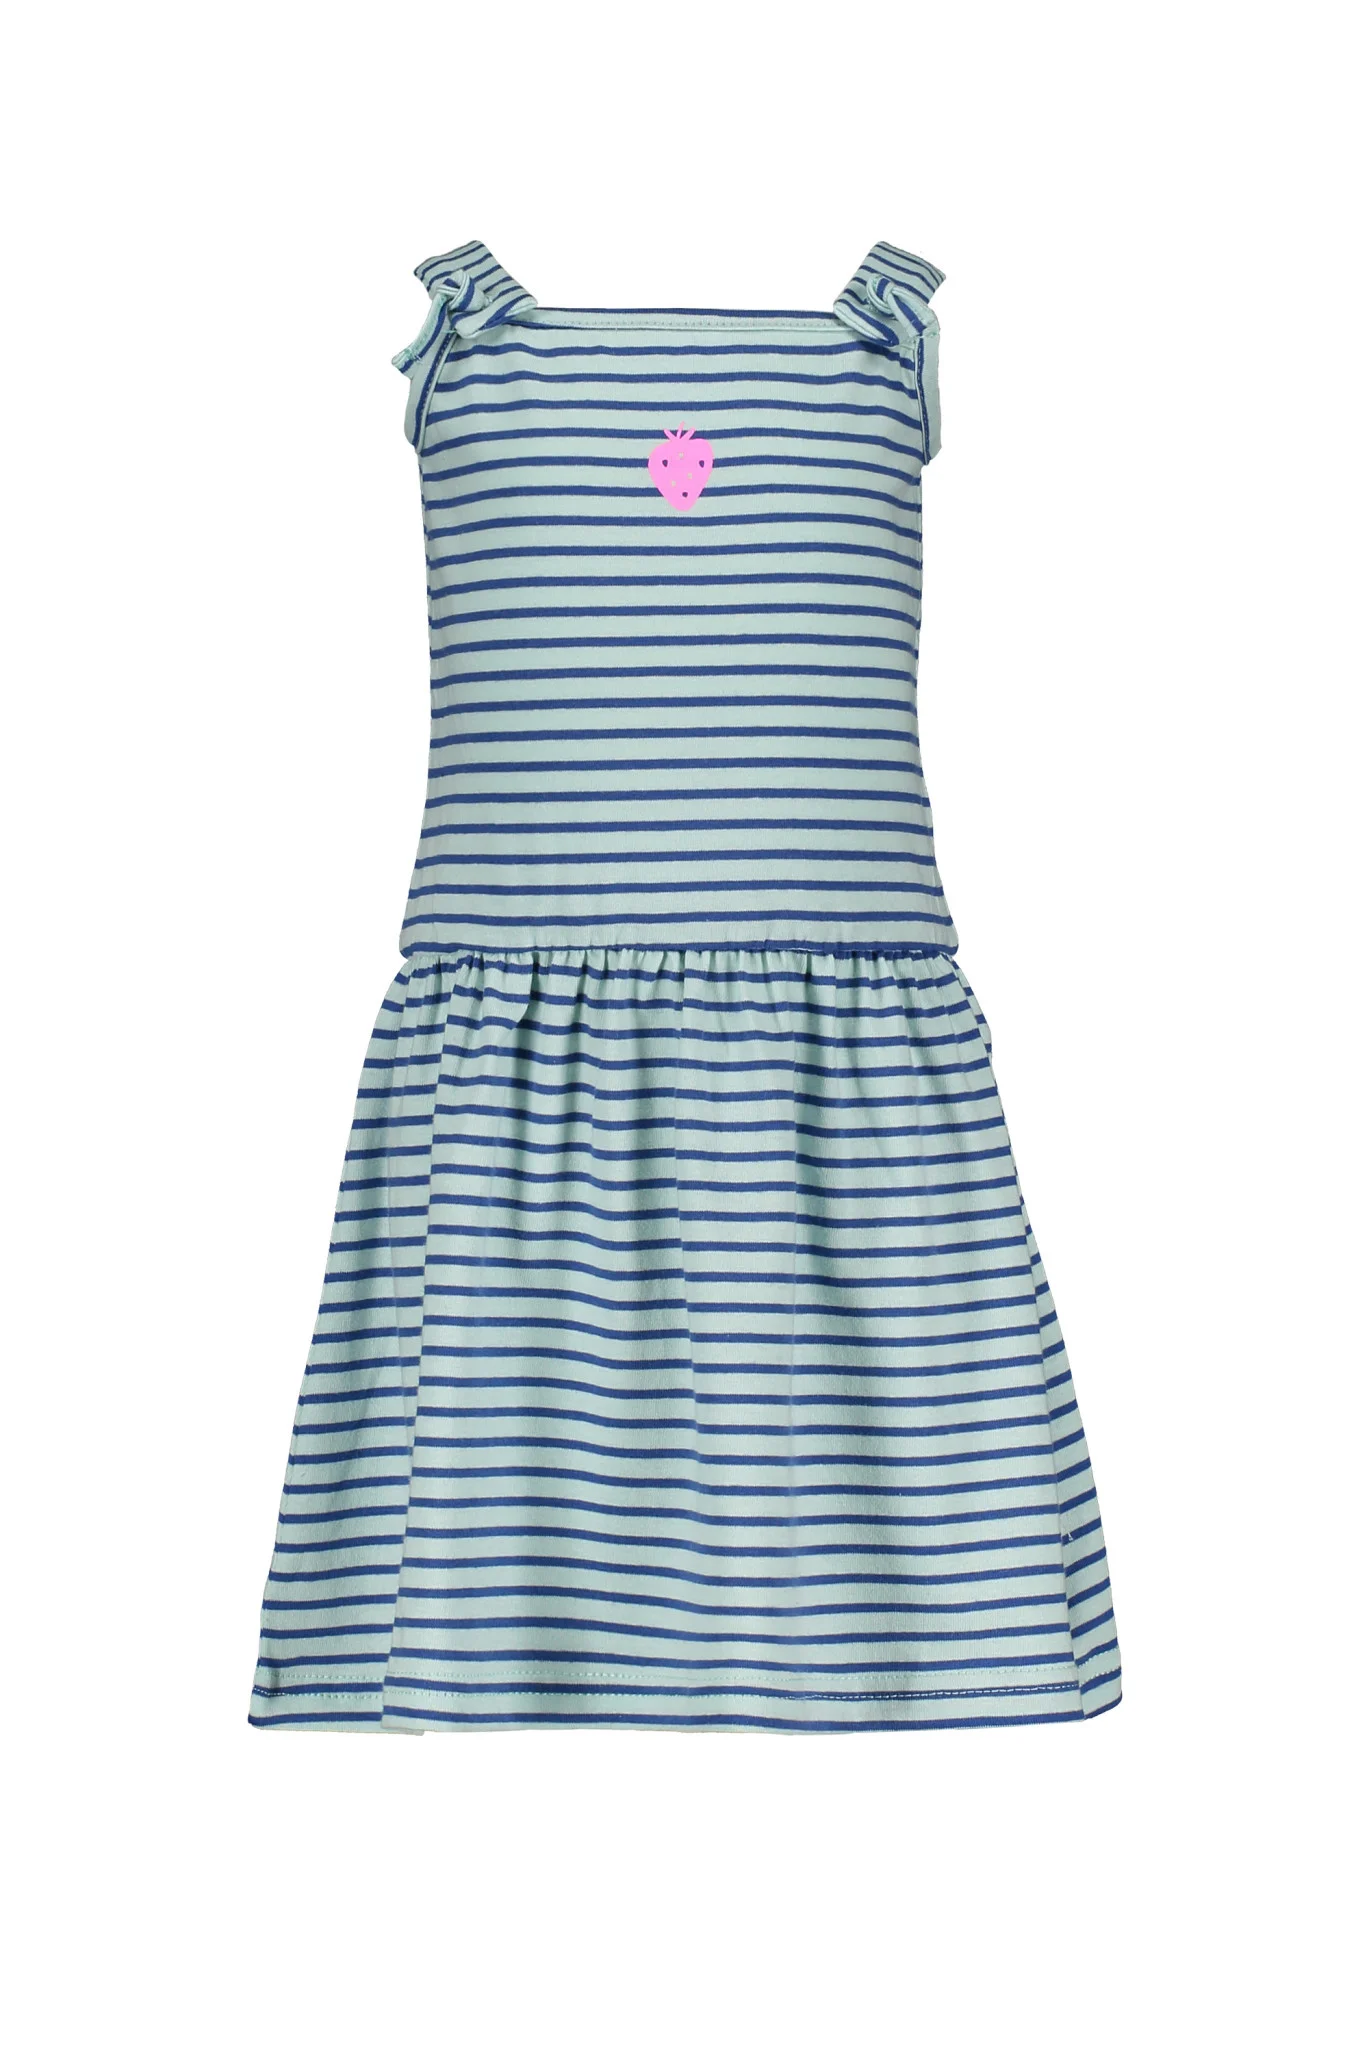 Afbeelding van Bampidano Baby meisjes jurk elle stripe